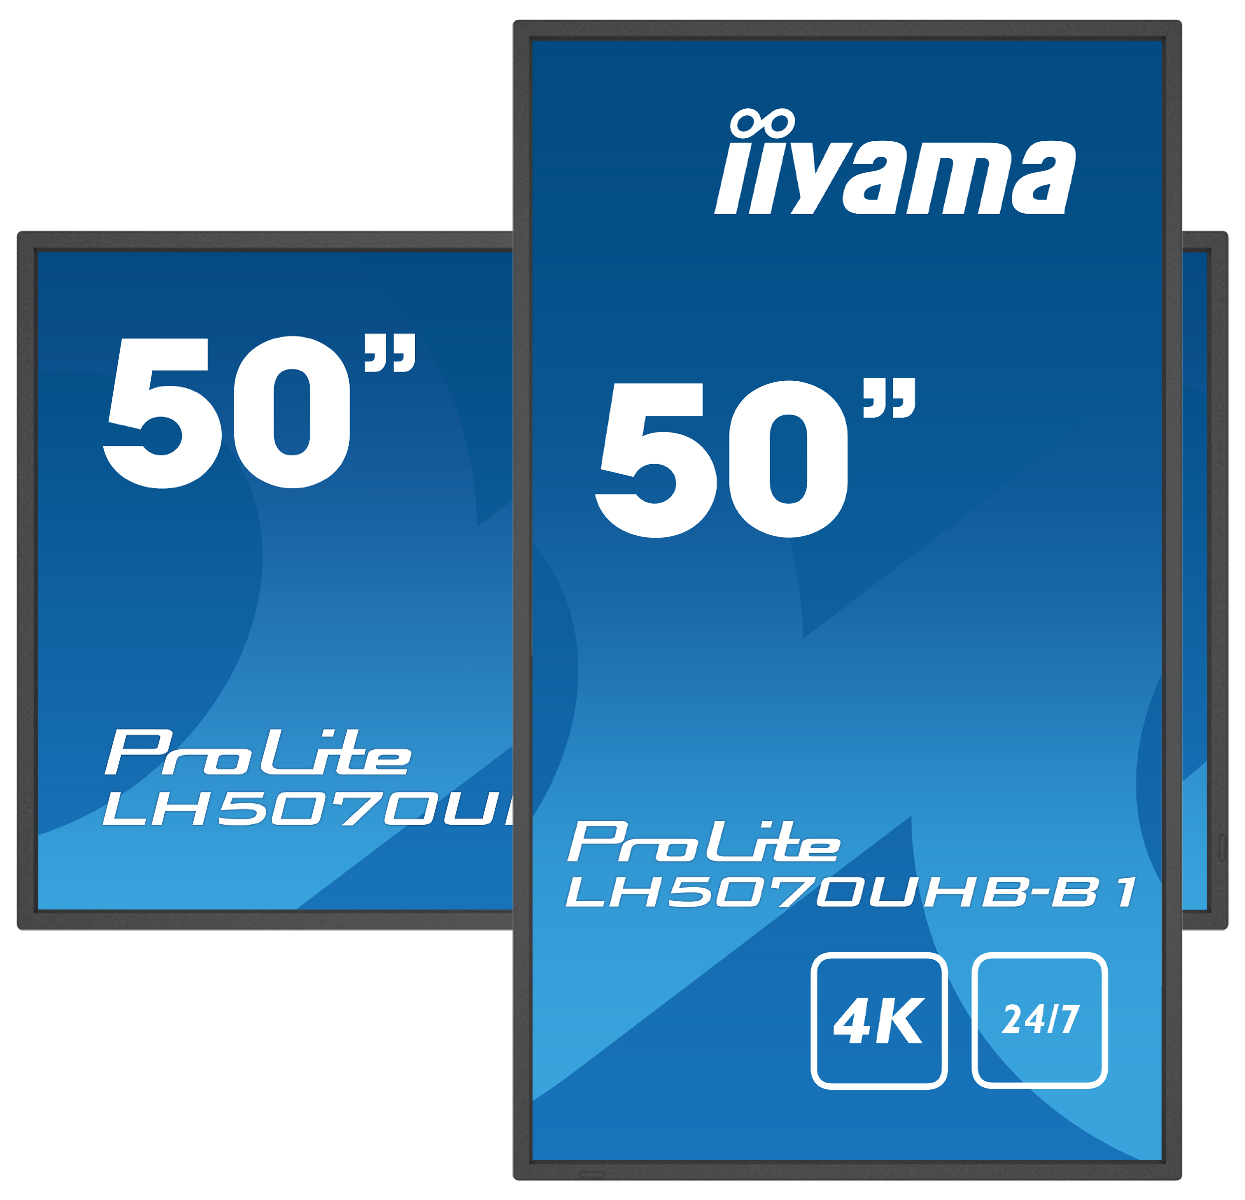 iiyama ProLite LH5070UHB-B1 - 50 inch - 700 cd/m² - Ultra-HD - 3840x2160 pixel - 24/7 - Android 9 - Display